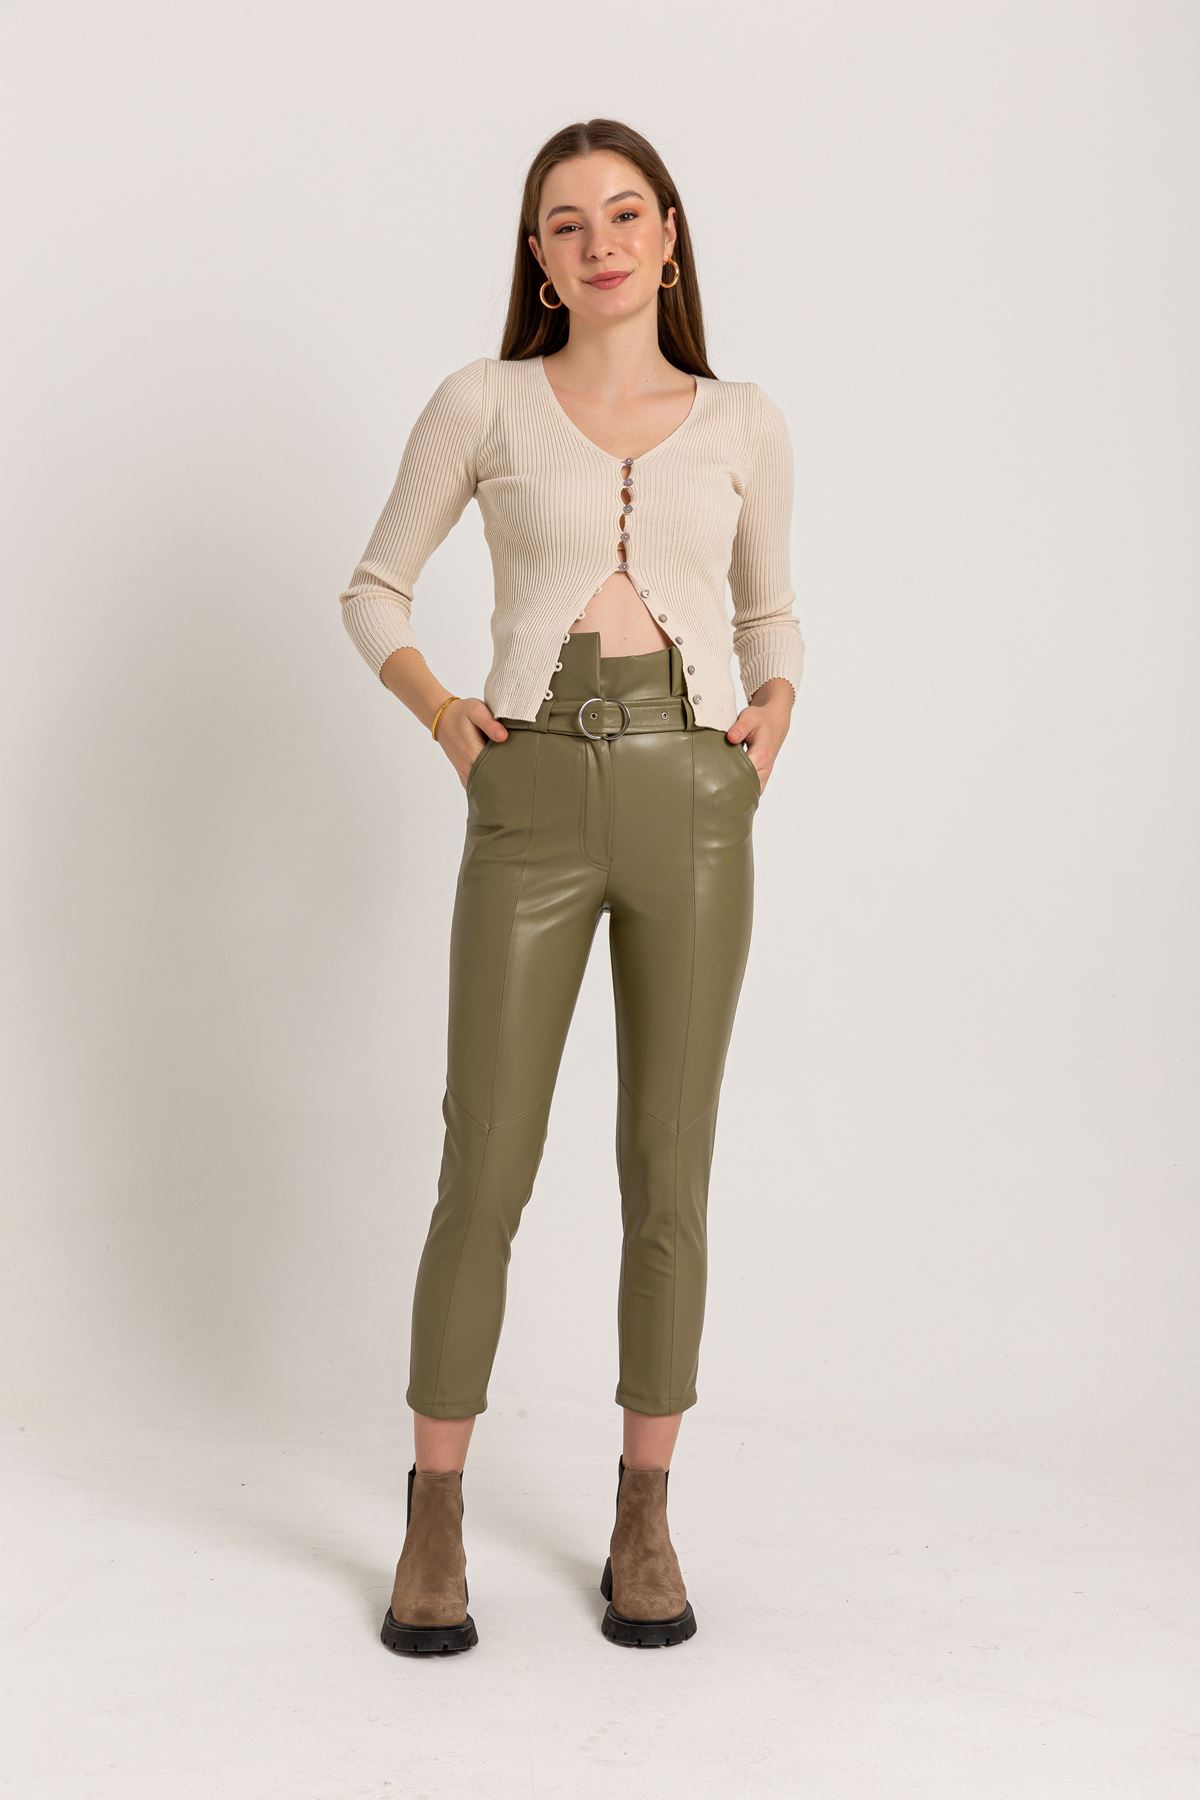 Leather Fabric Long Tigth Fit High Waist Belt Women'S Trouser - Khaki 